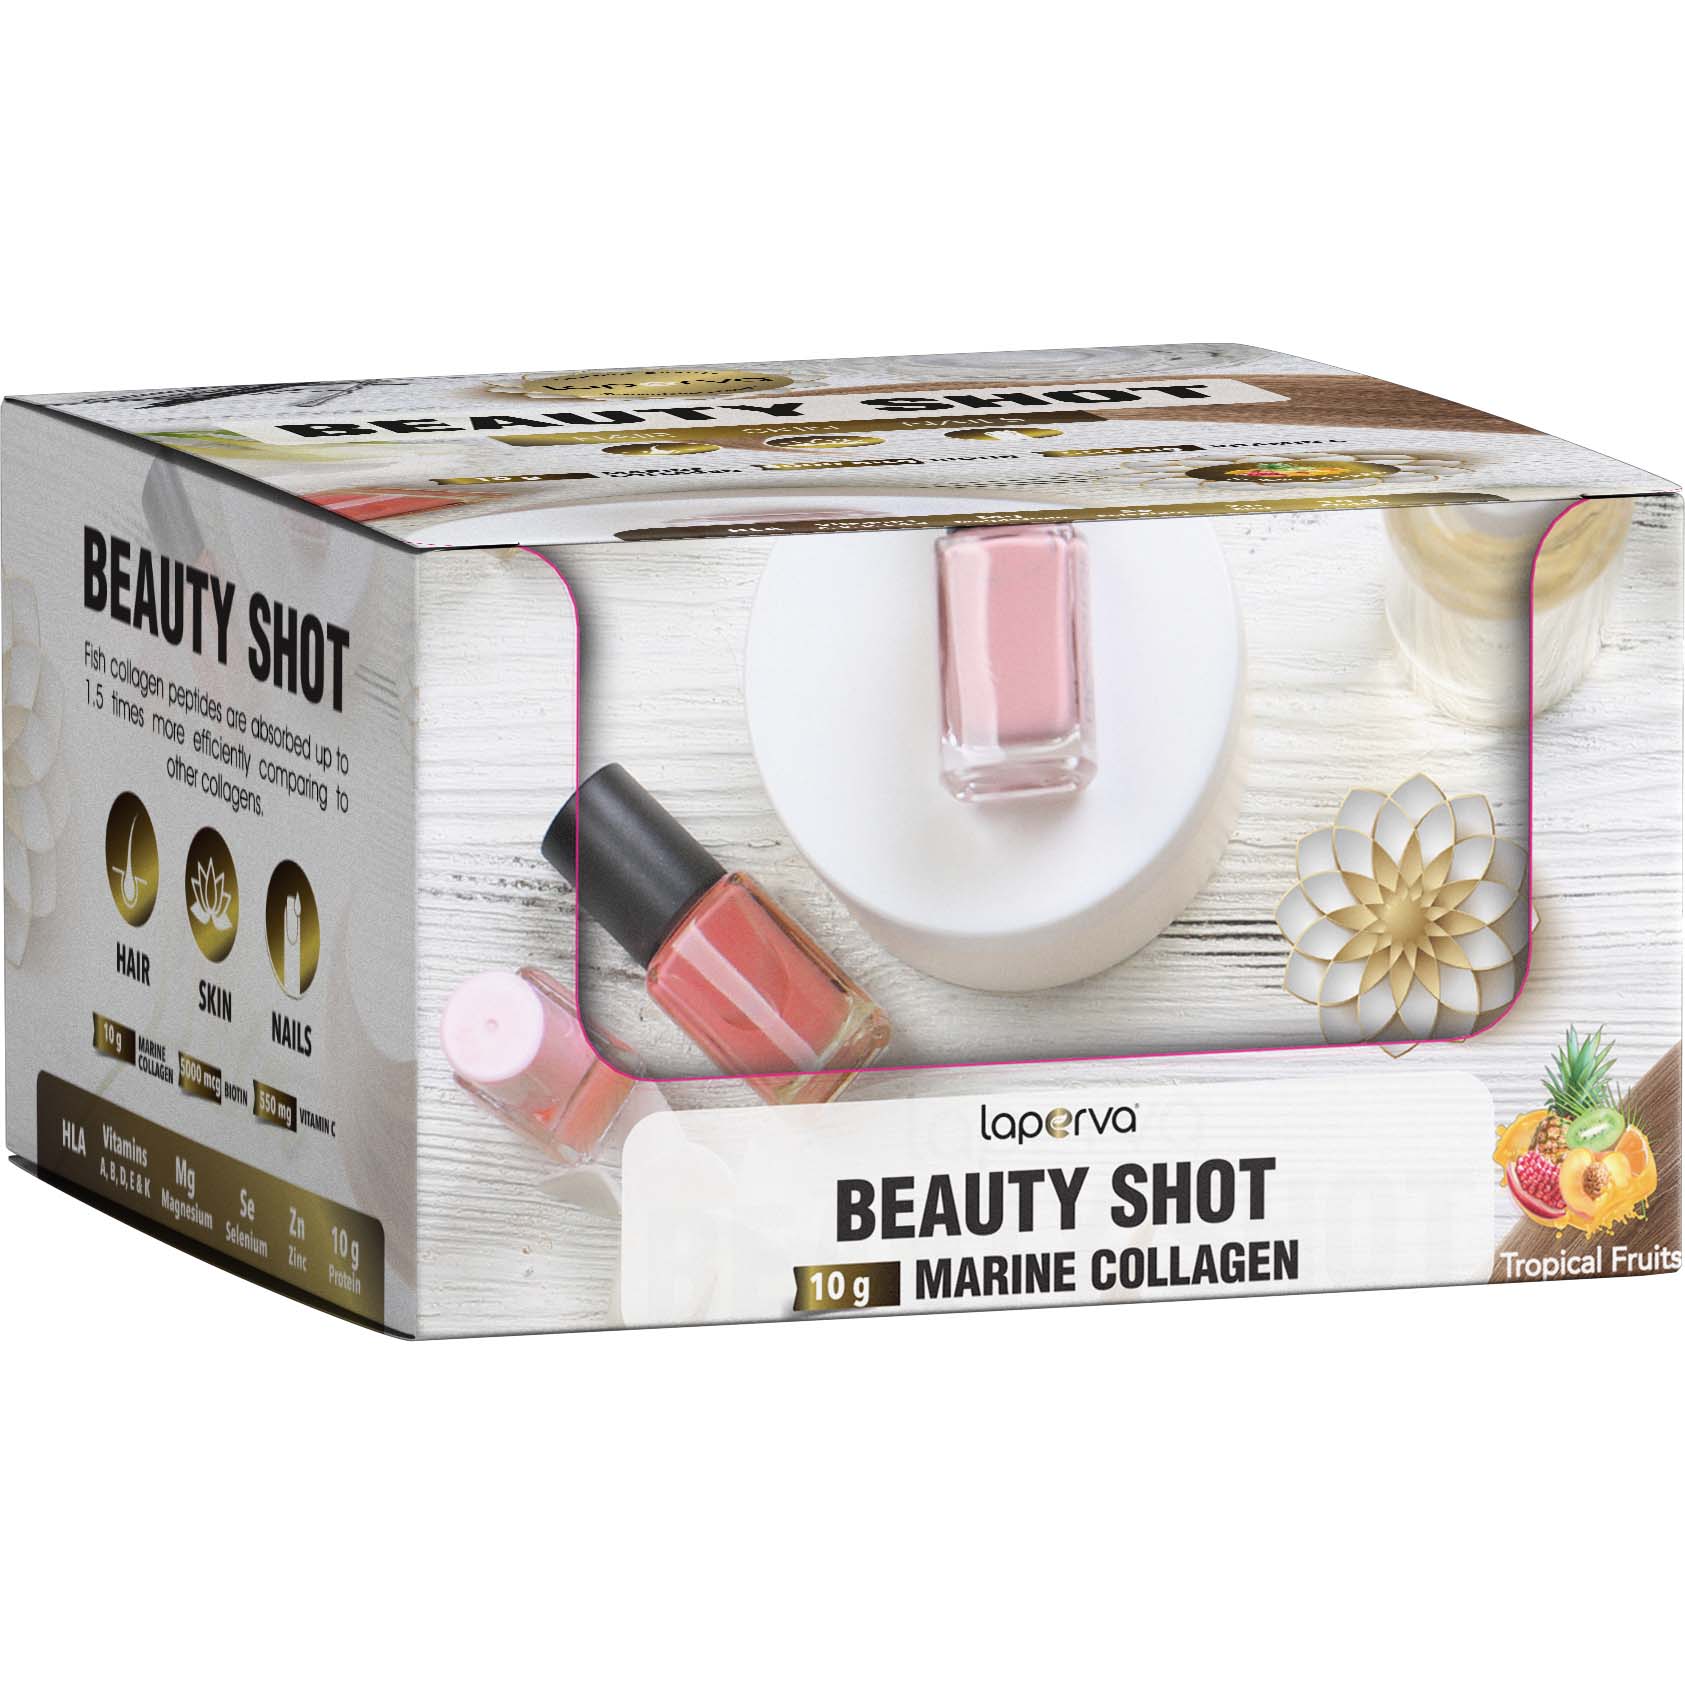 Laperva Beauty Shot Marine Collagen, Box of 12 Shots, Tropical Fruits